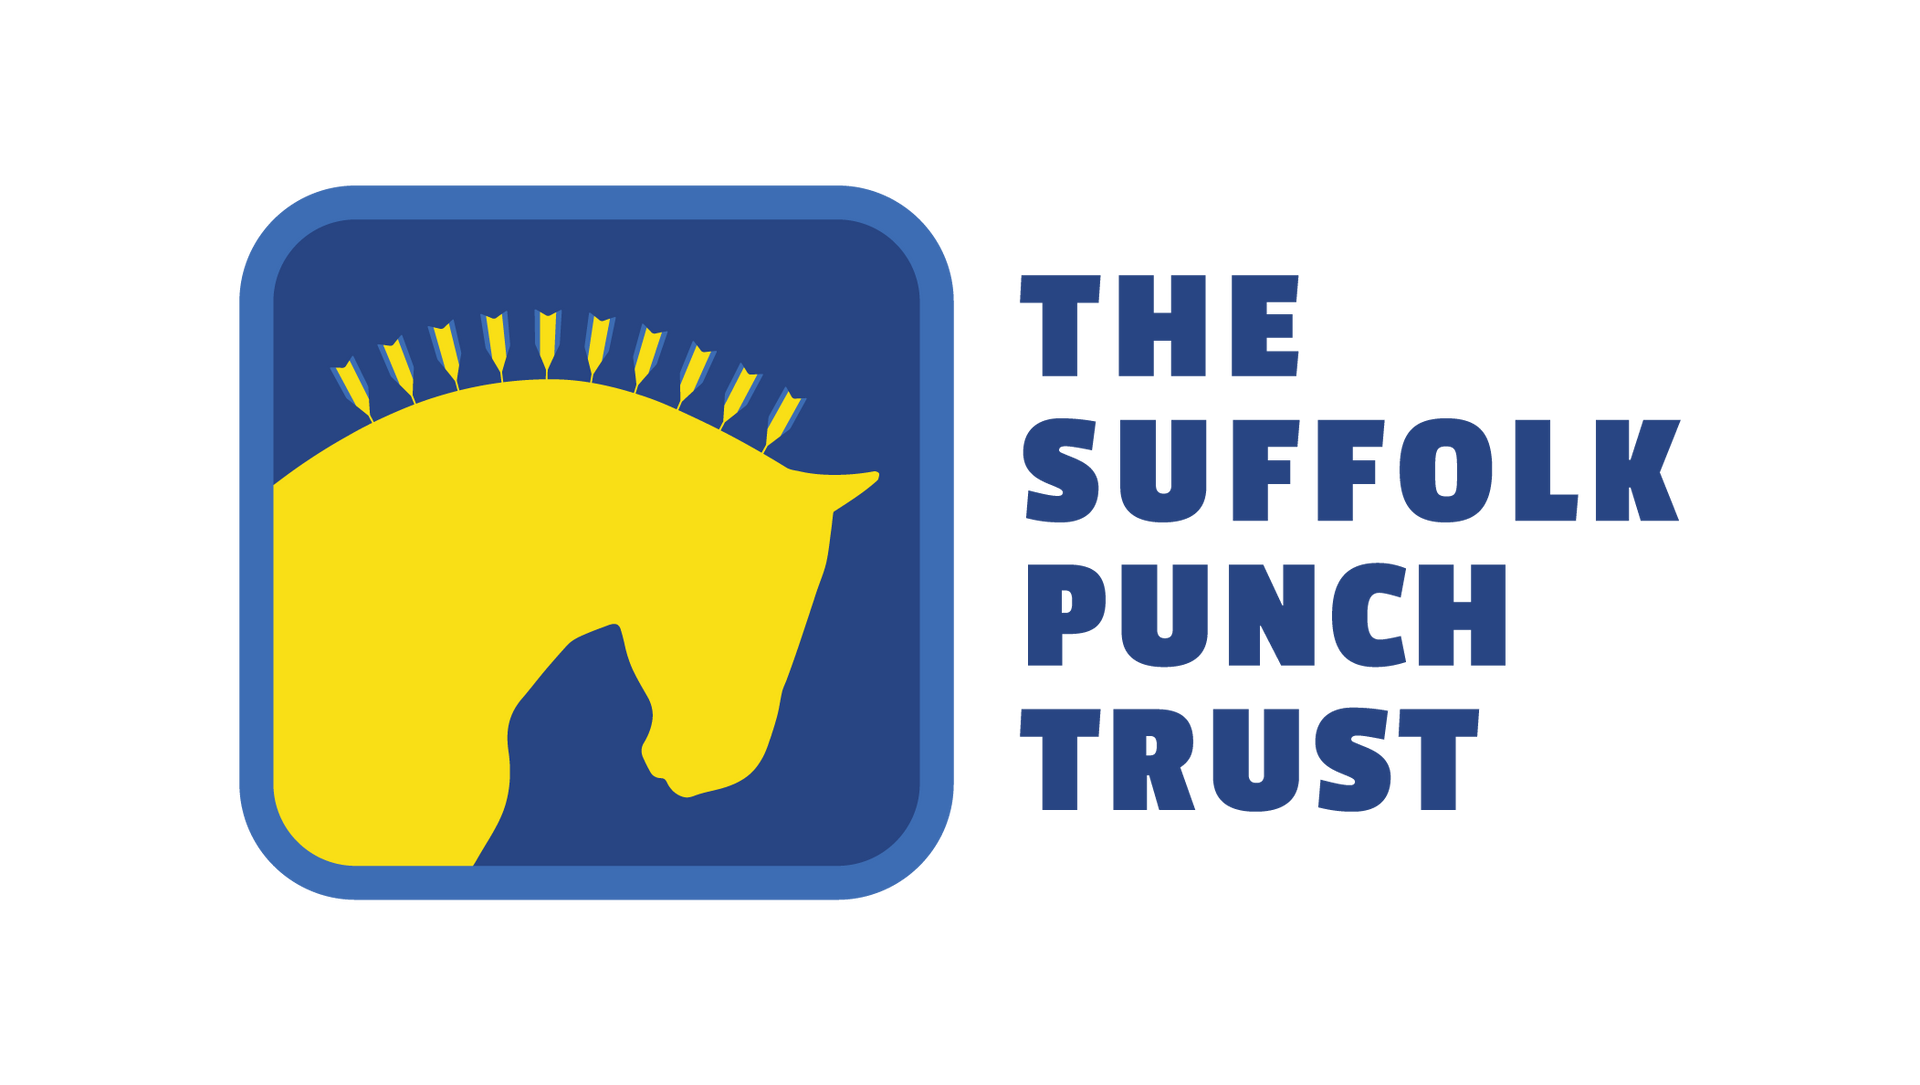 The Suffolk Punch Trust horse logo